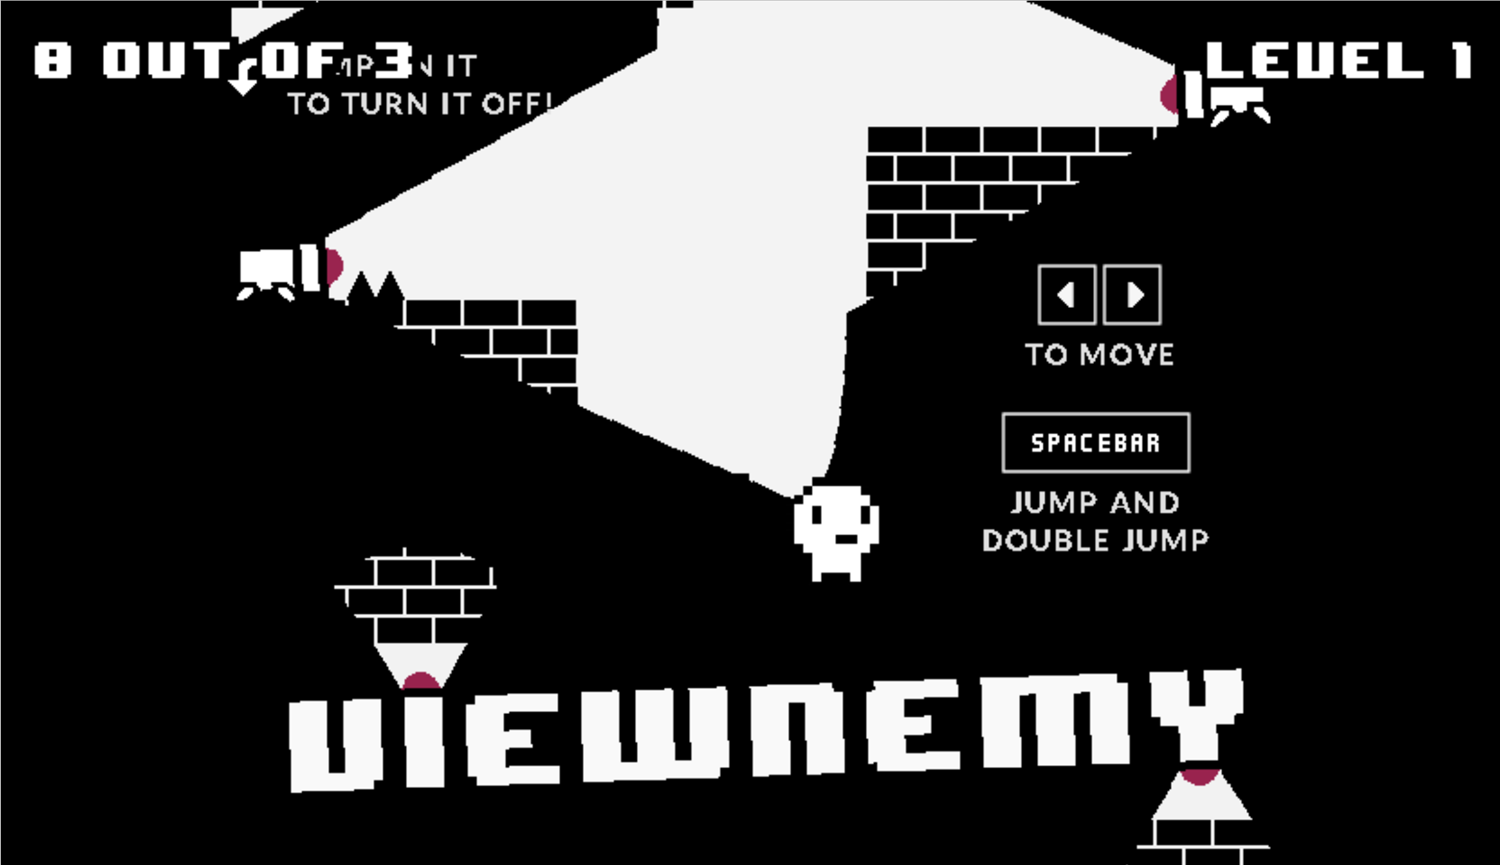 Viewnemy Game Instructions Screenshot.